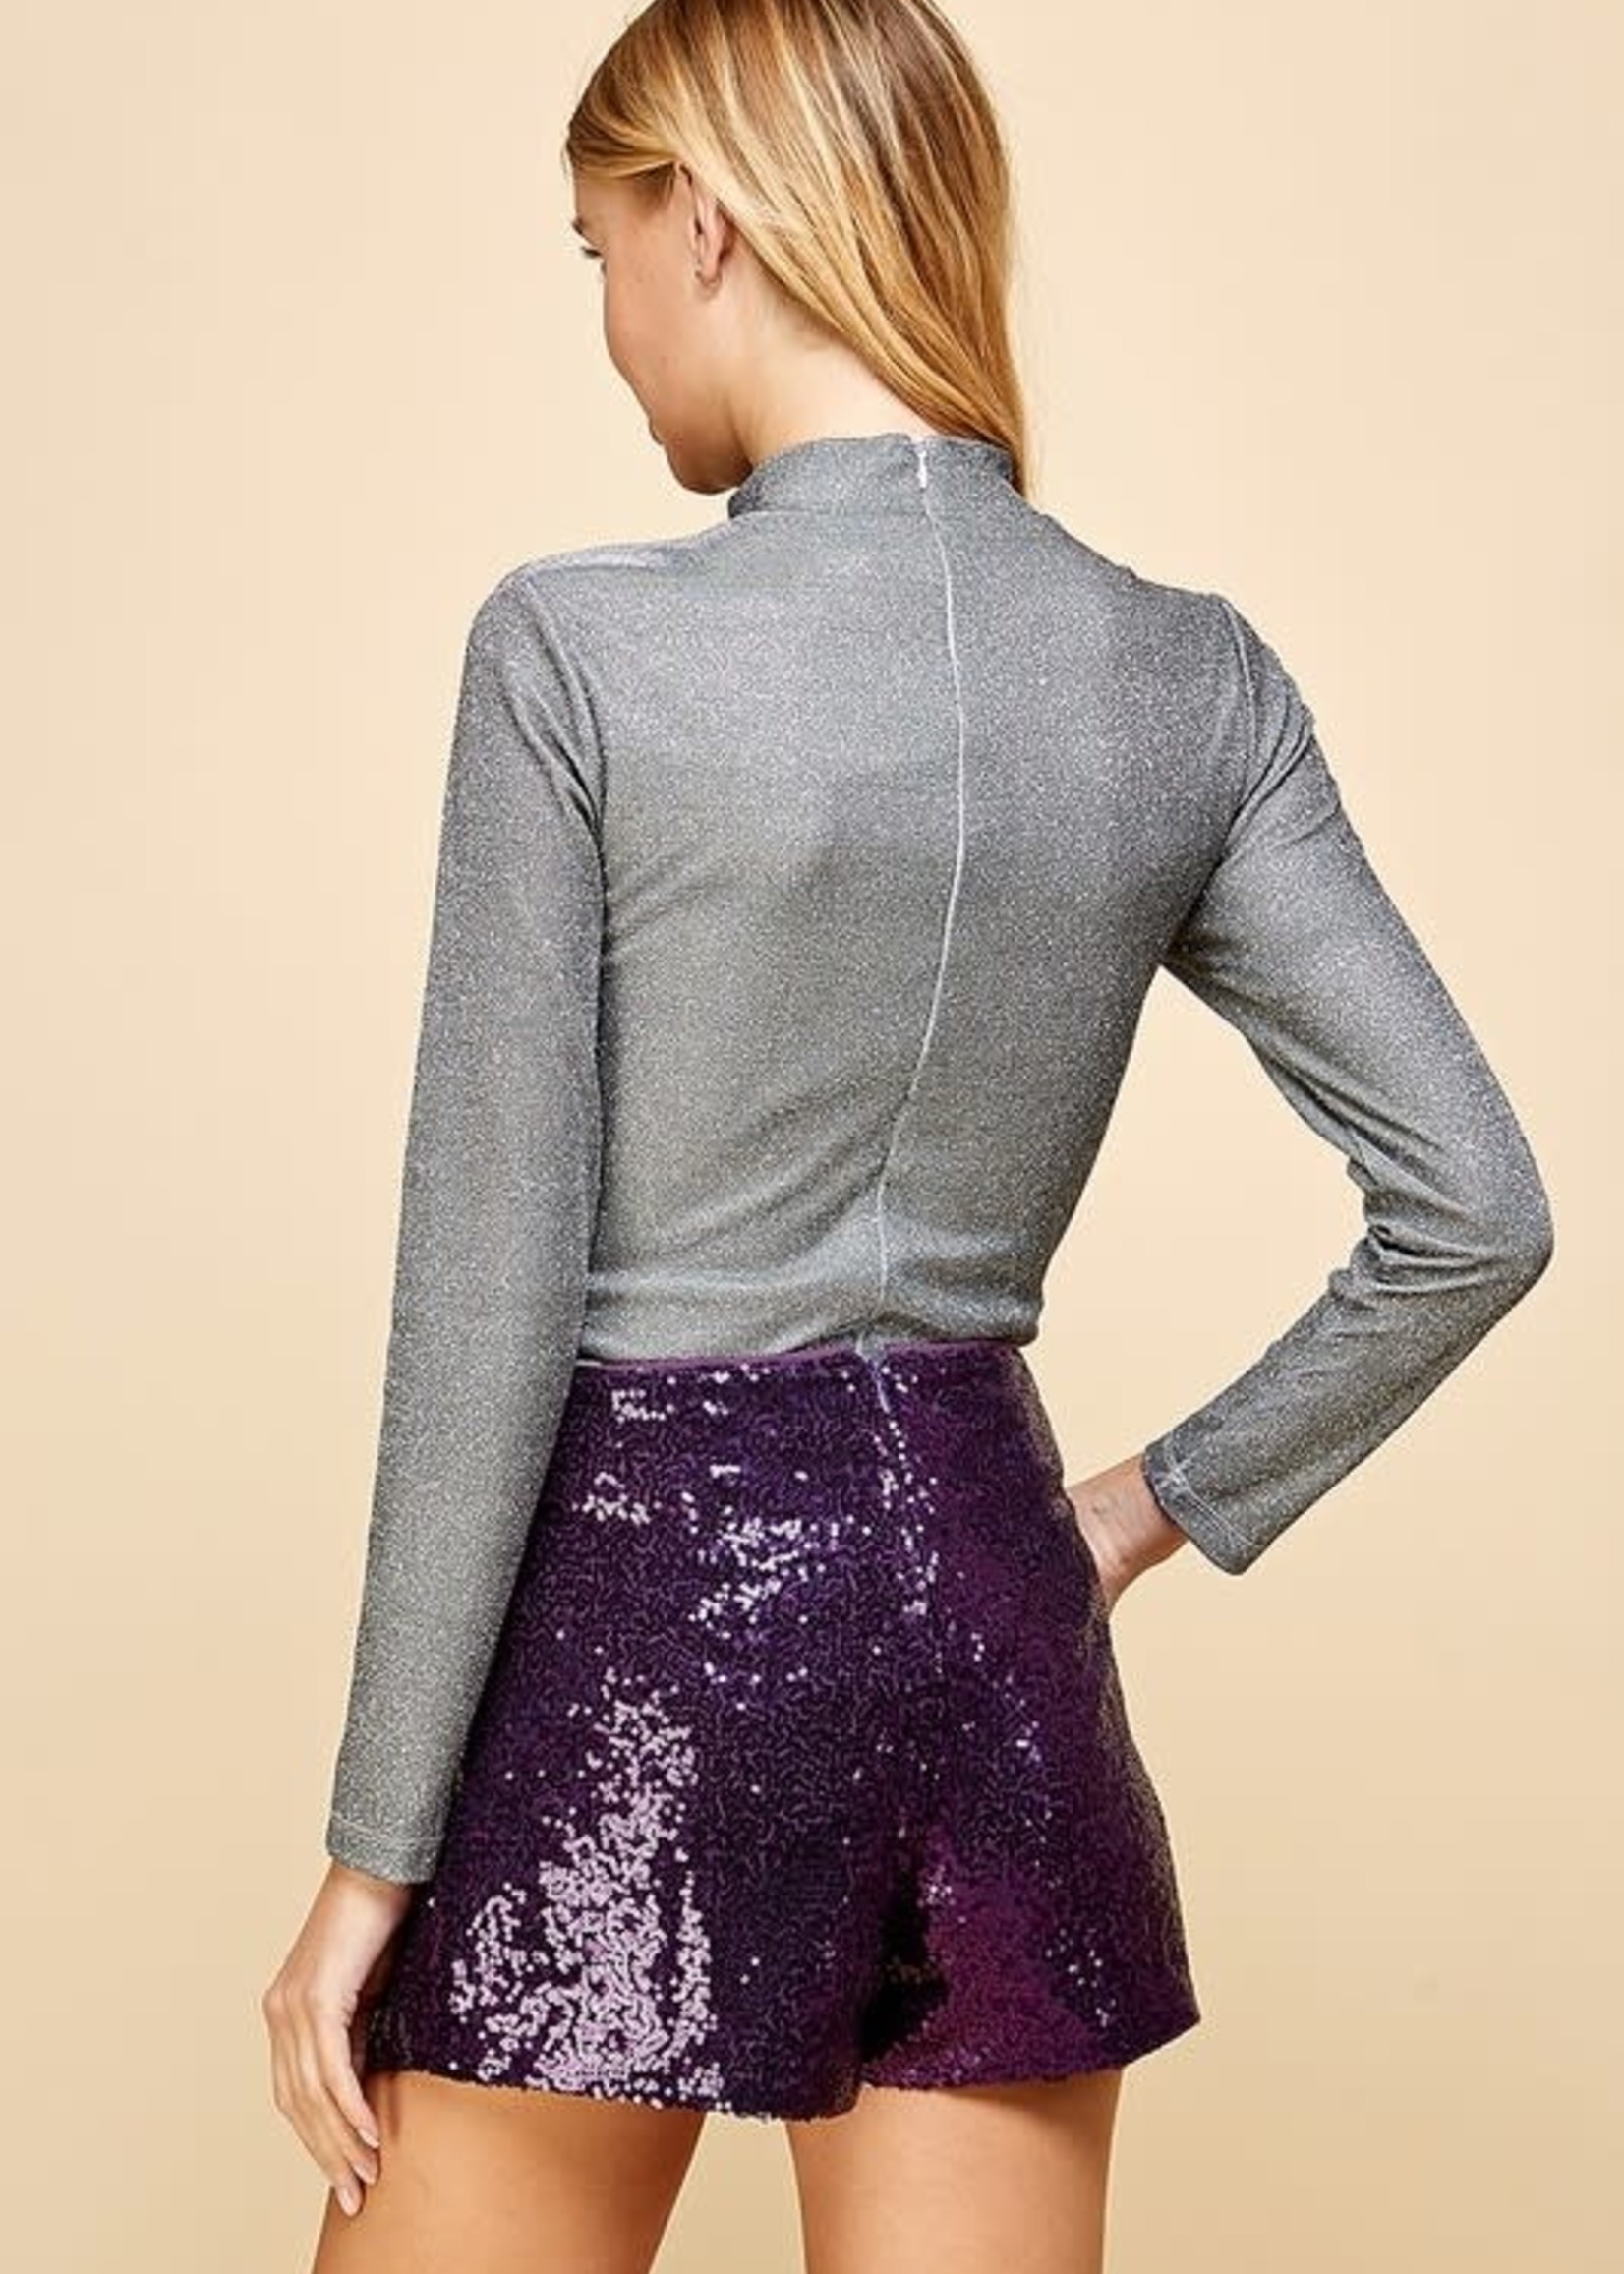 Shimmery Bodysuit (2 Colors)